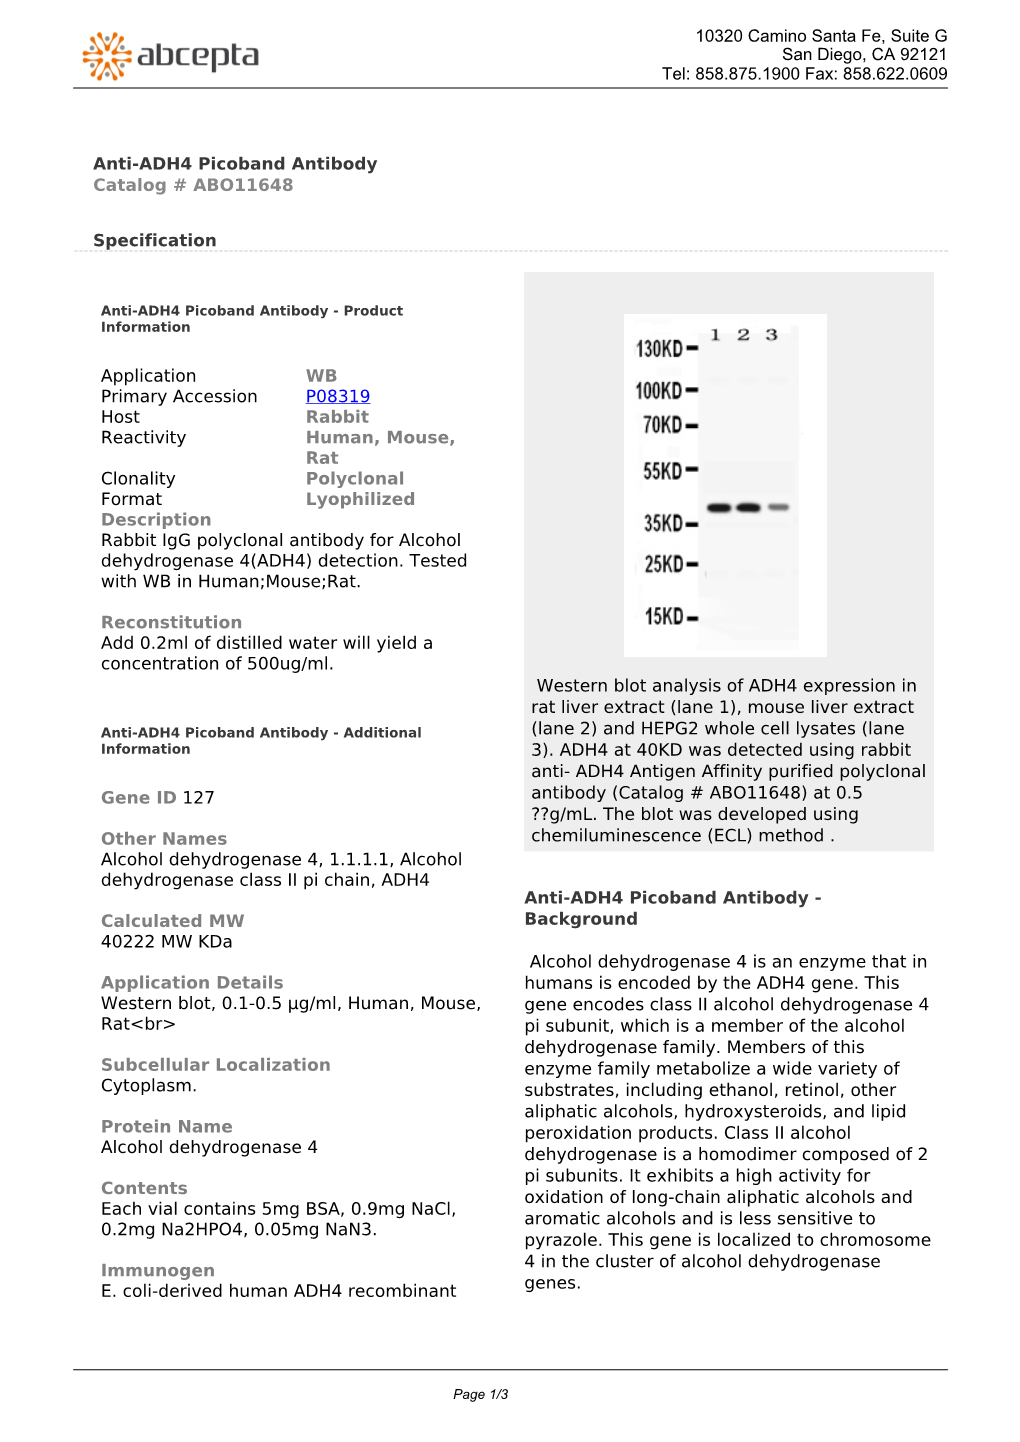 Anti-ADH4 Picoband Antibody Catalog # ABO11648